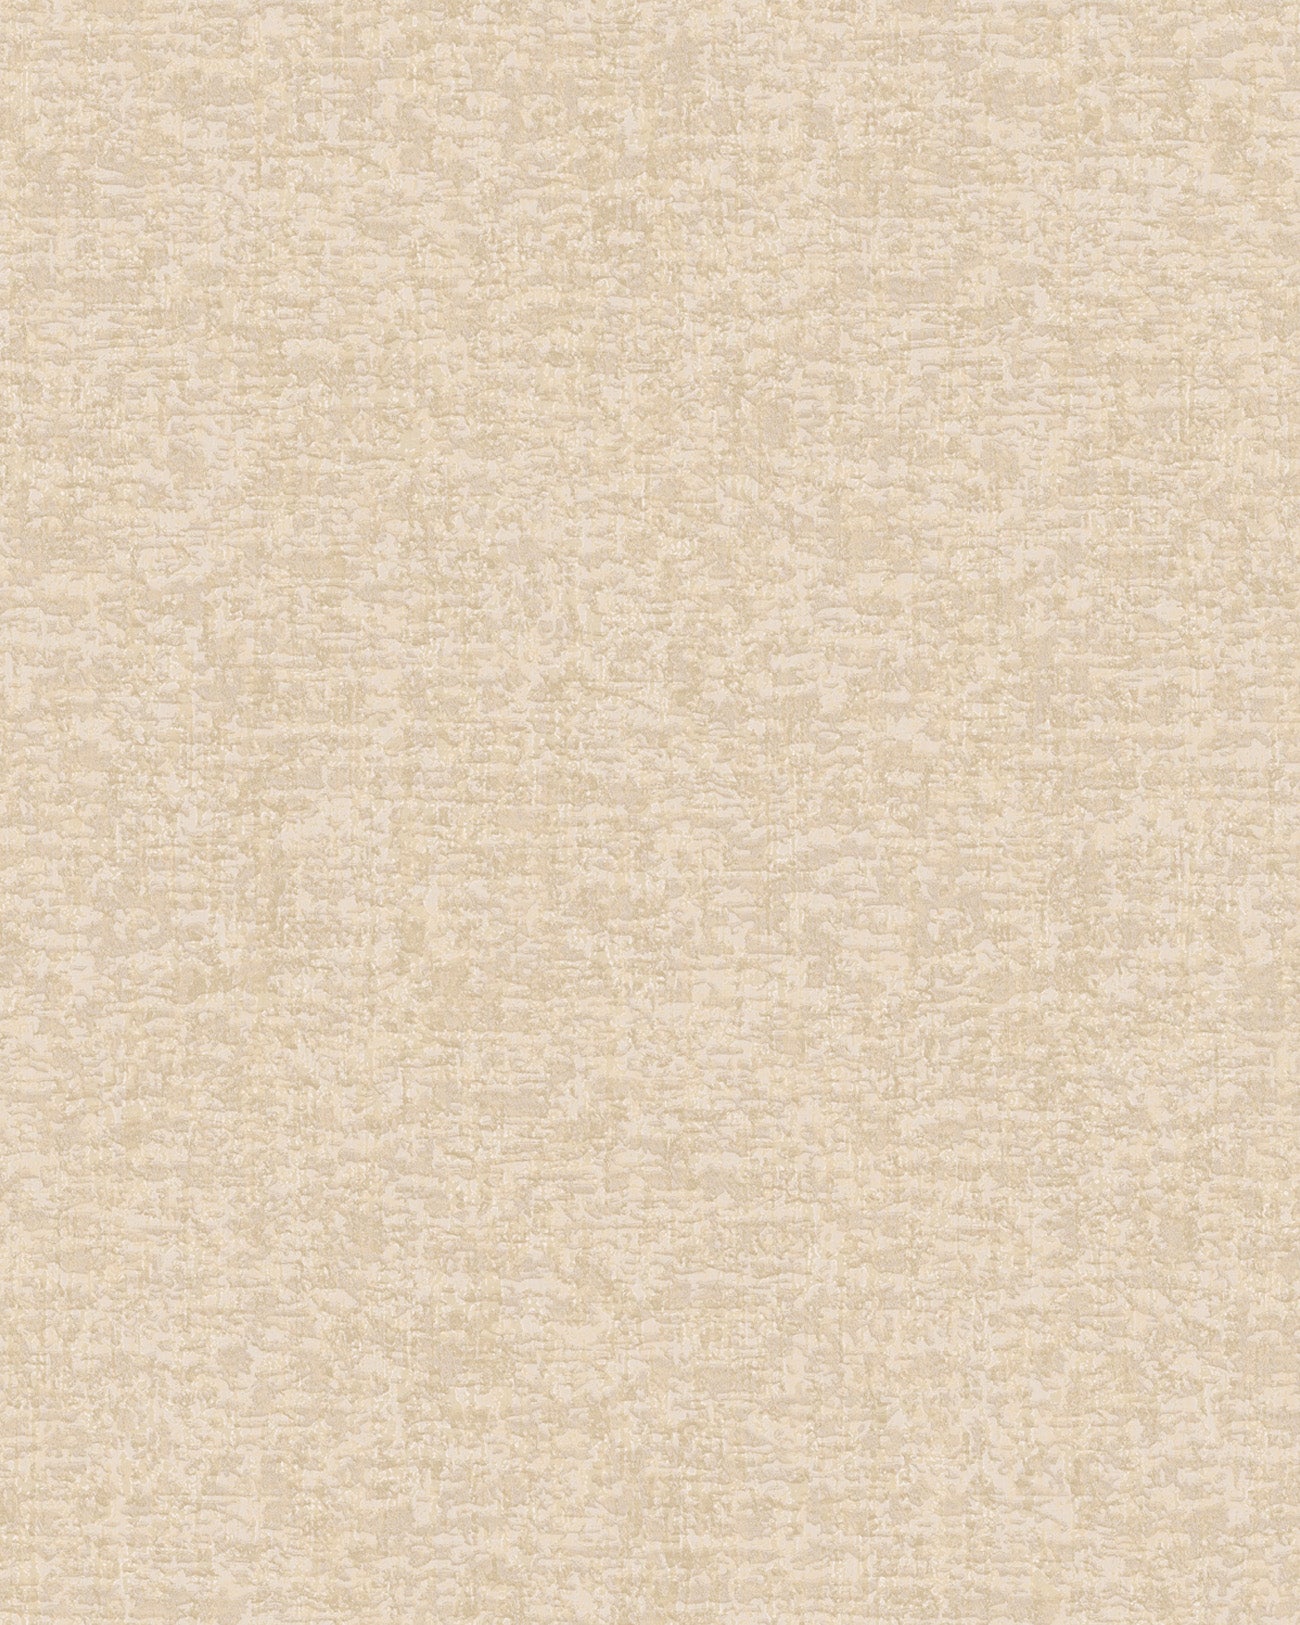 Textiloptik-Tapete Profhome DE120052-DI Heißgeprägte Vliestapete in mattem Textiloptik-Elfenbein-Creme 5,33 m2